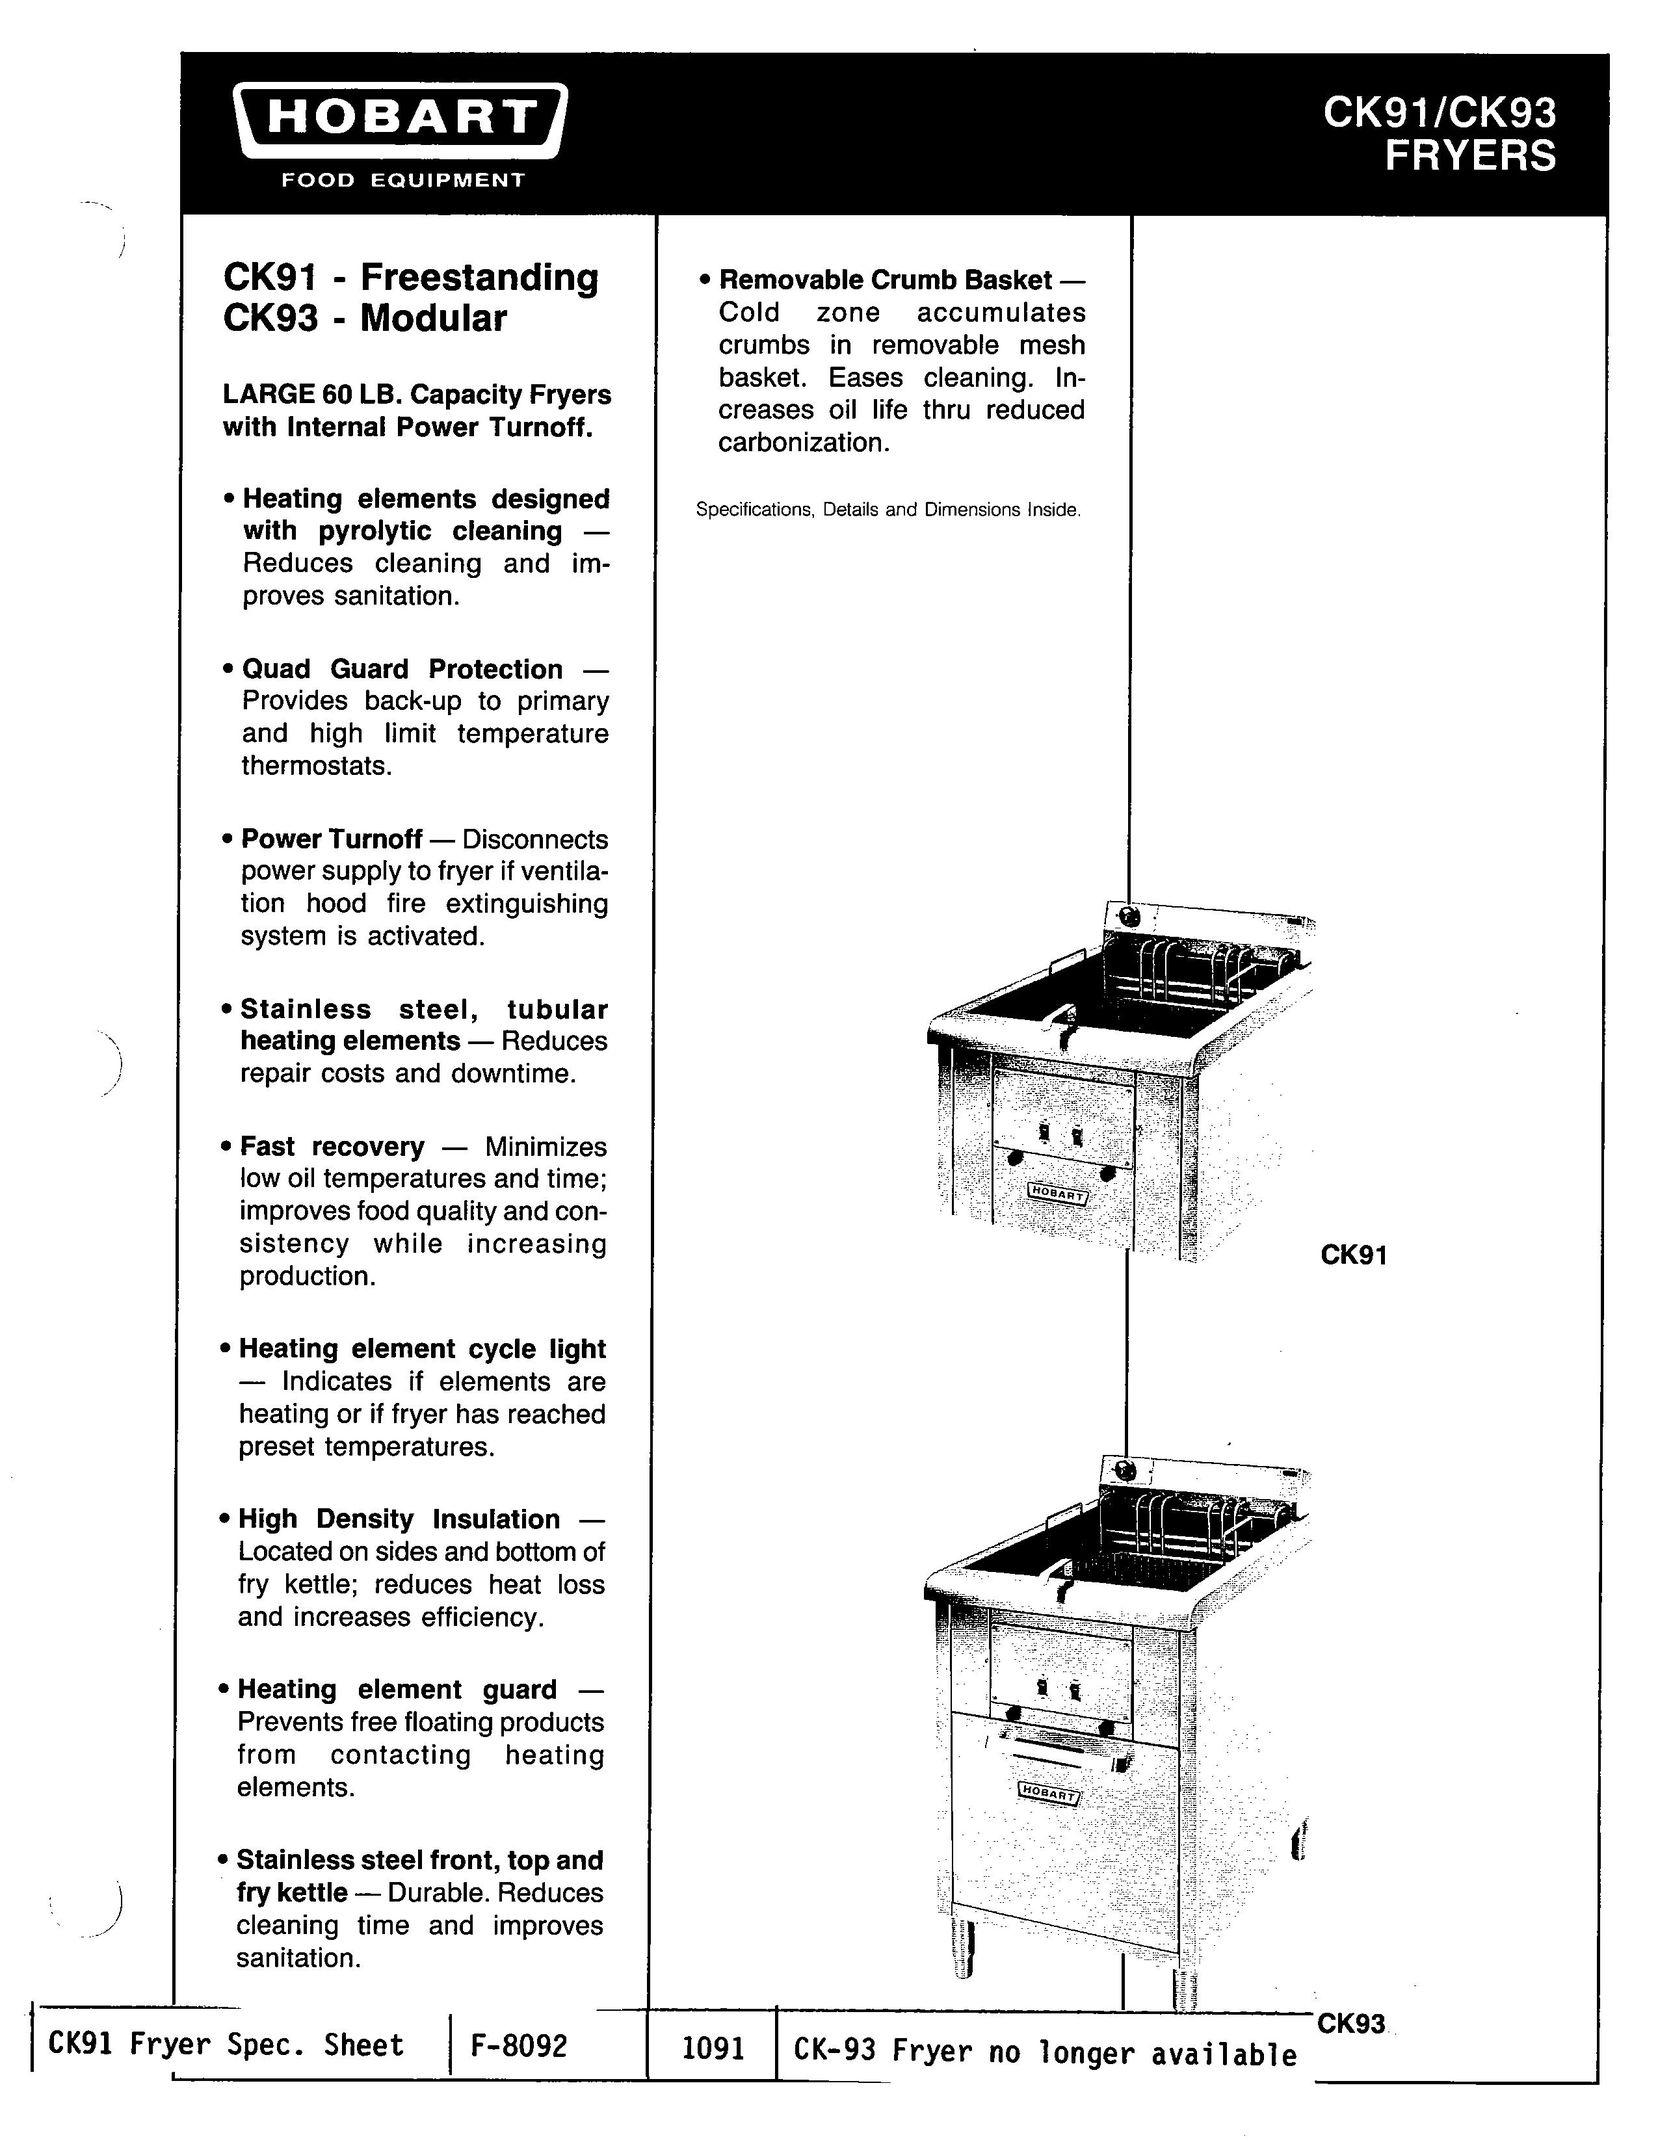 Hobart CK93 Fryer User Manual